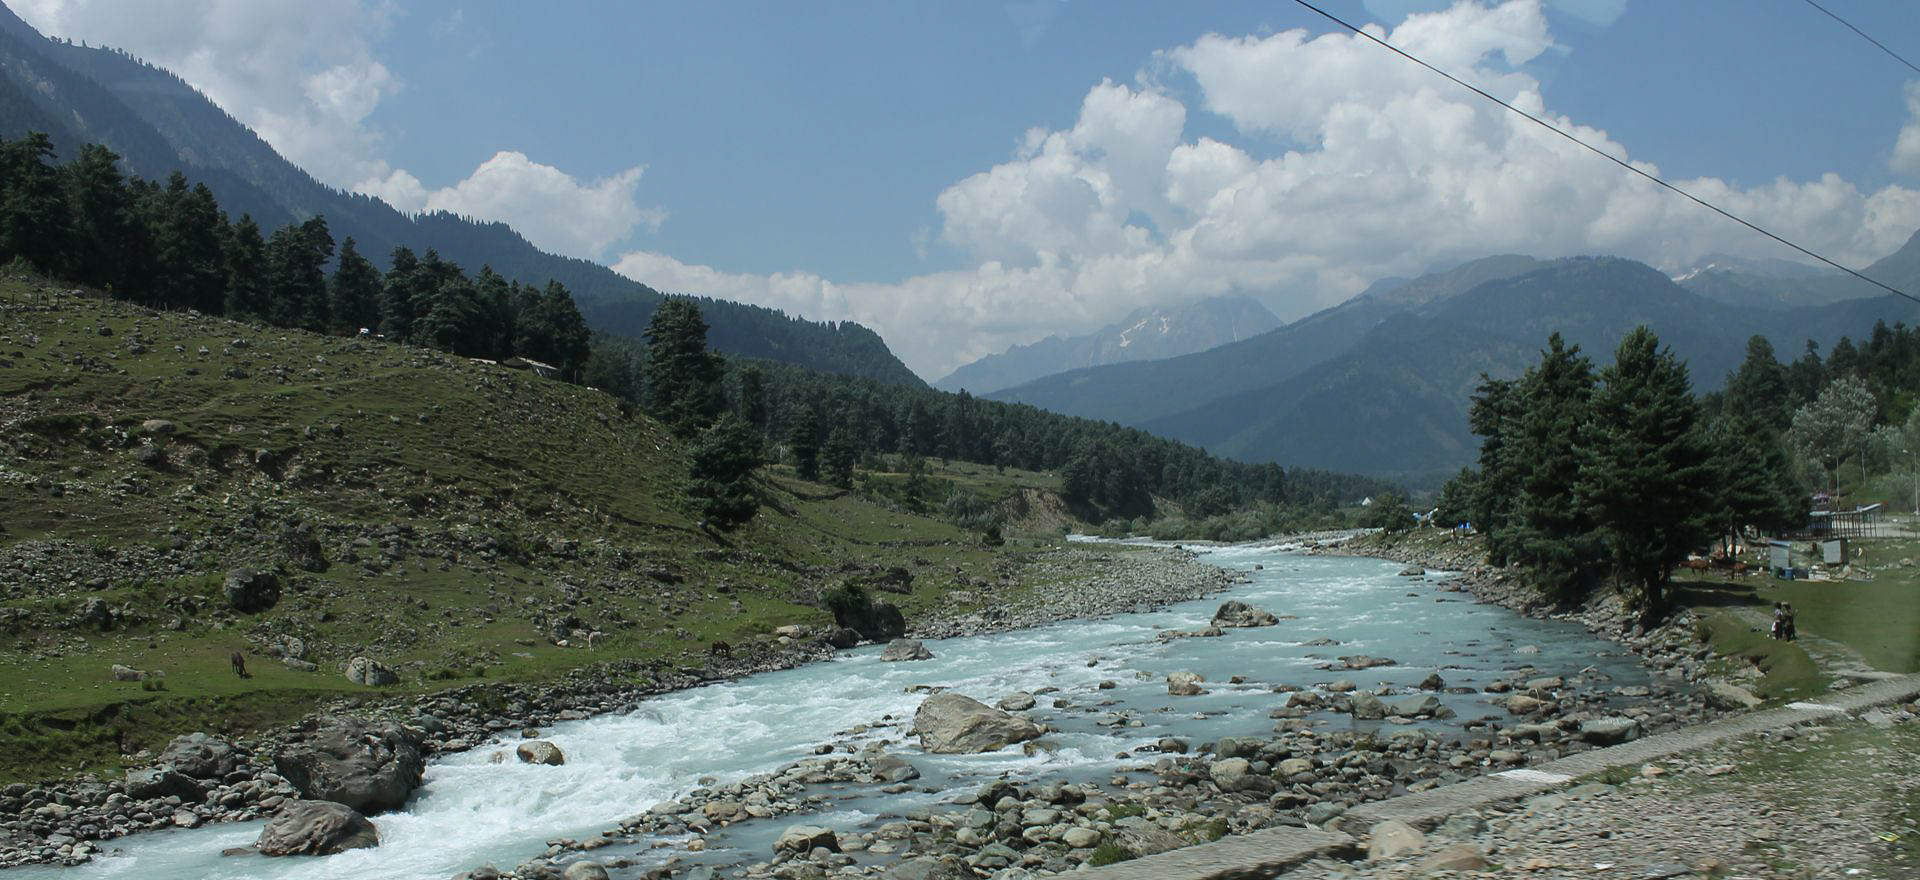 River running through the Himalayas - India Holidays and Tours